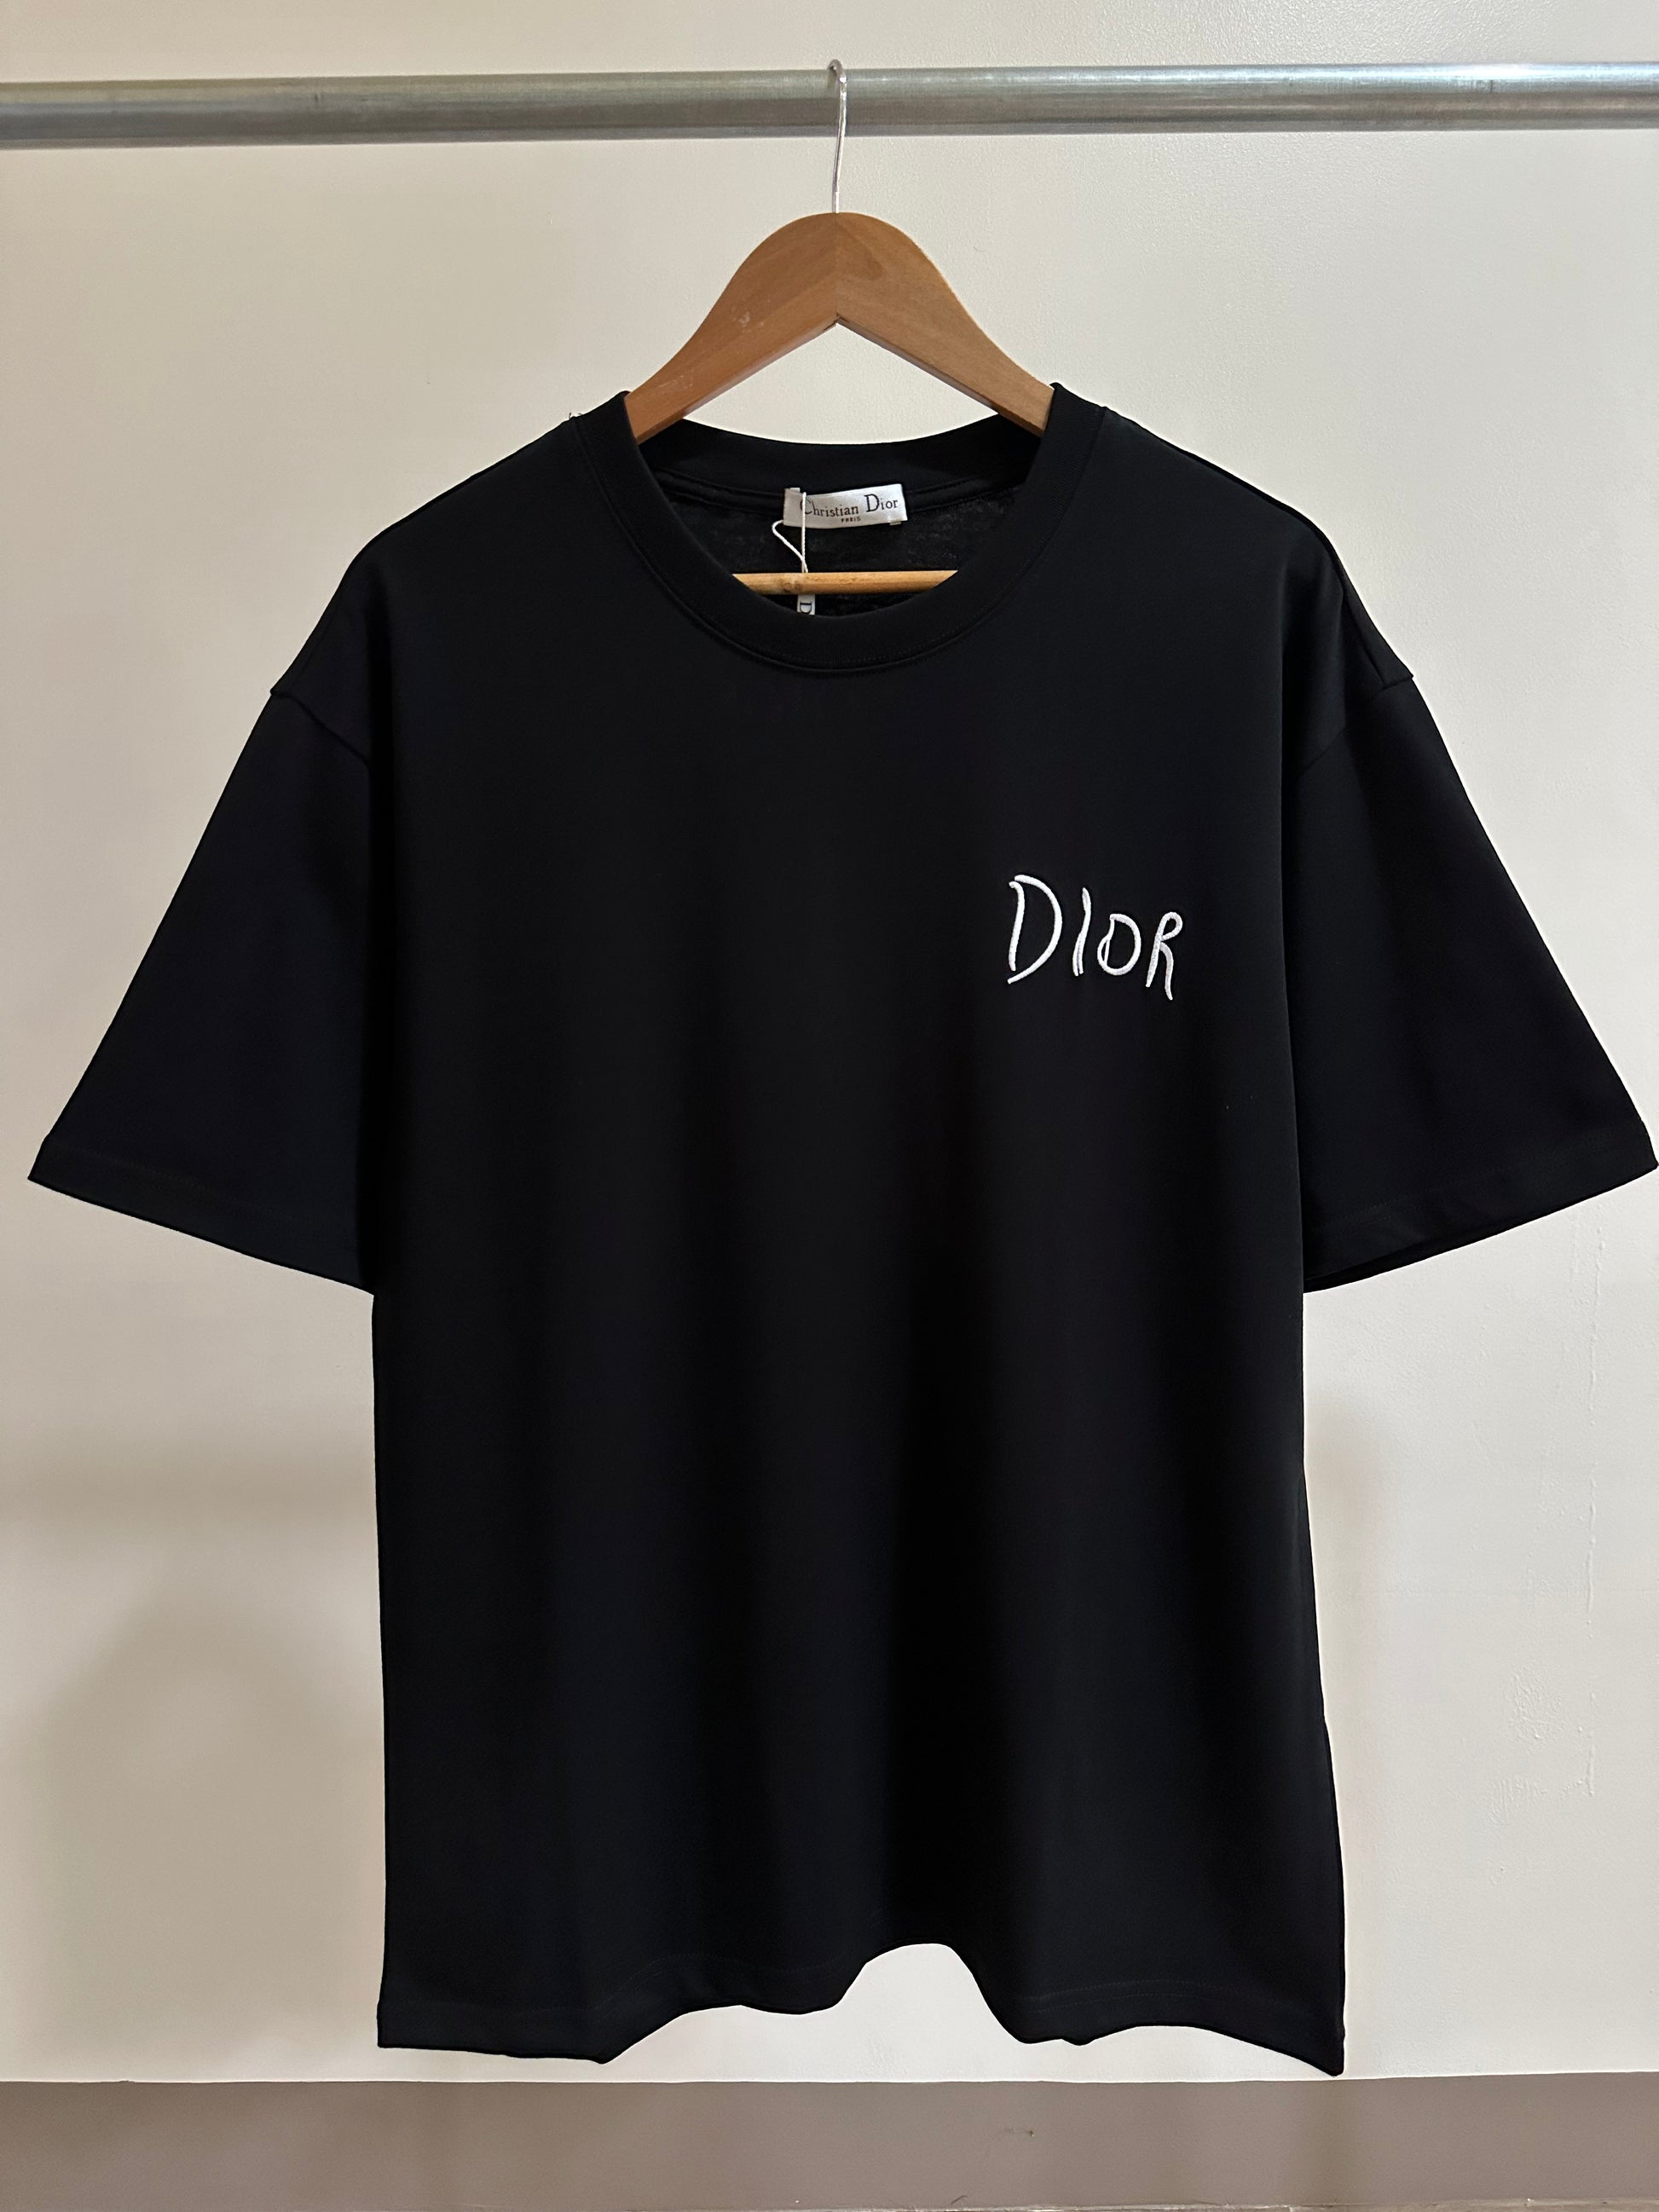 Christian Dior x Raymond Pettibon T-Shirt (Black)